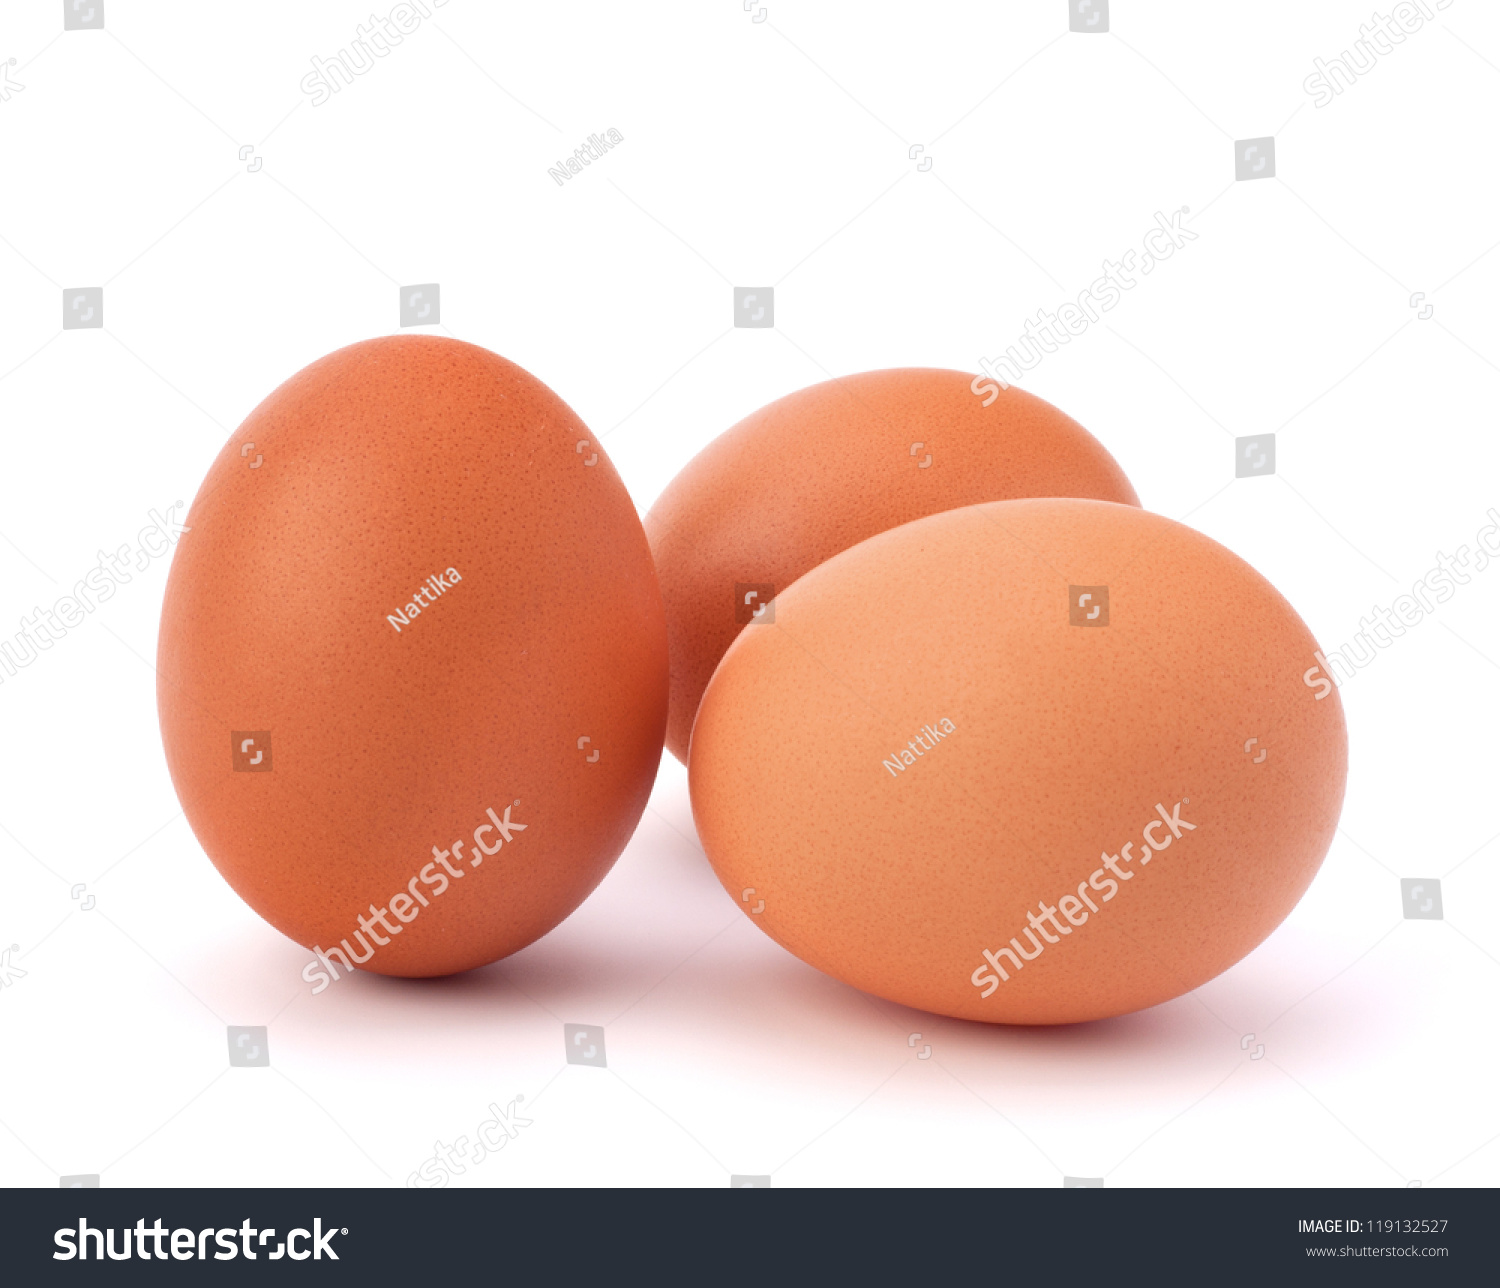 Three Eggs Isolated On White Background Stock Photo 119132527 ...